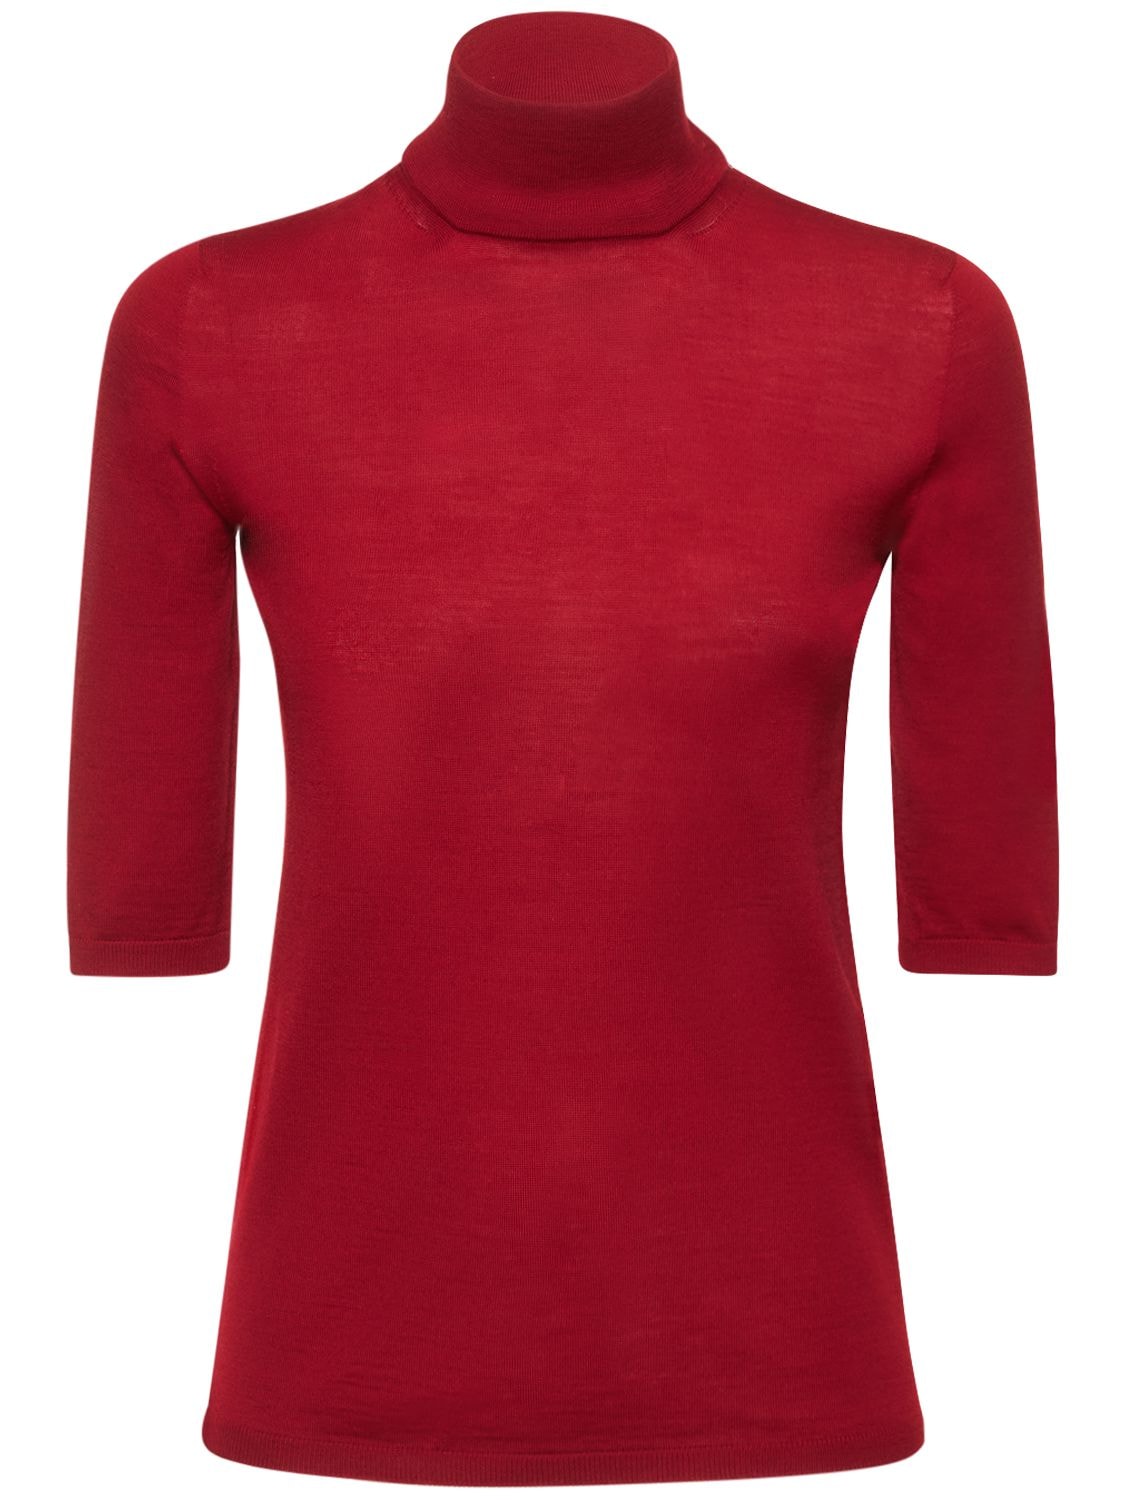 Max Mara - Unghia wool knit turtleneck top - Red | Luisaviaroma